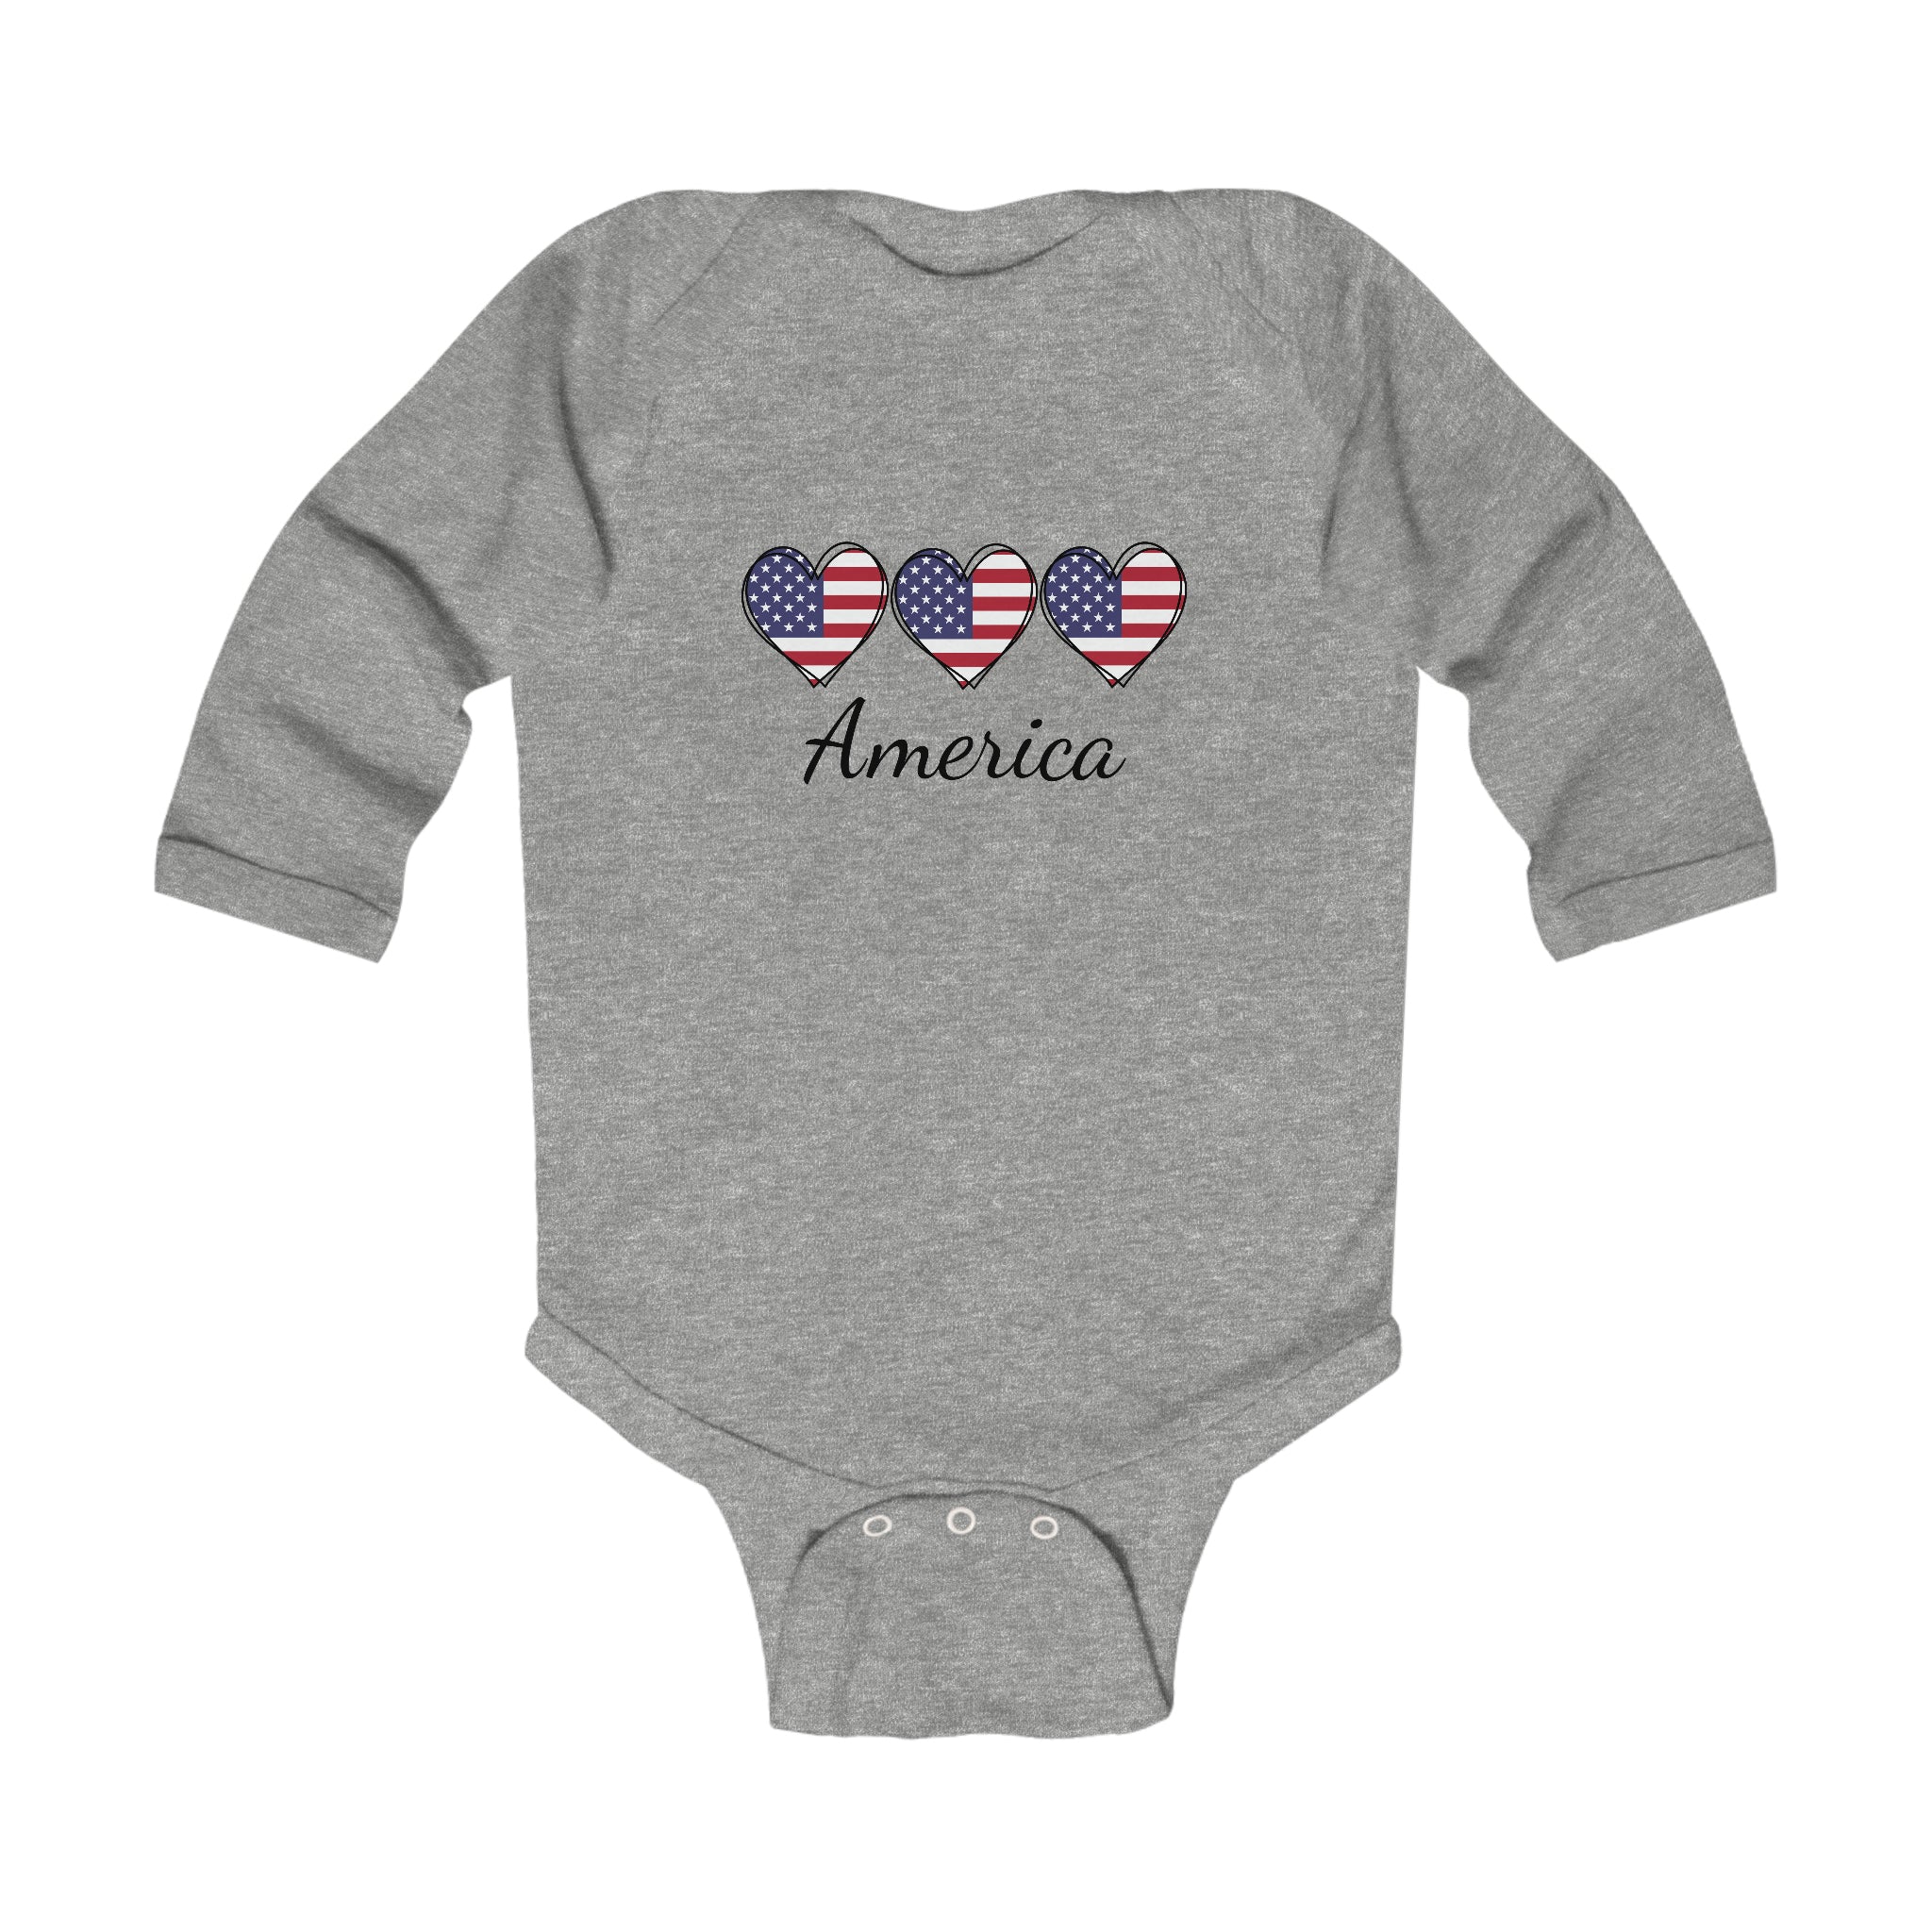 America 3 Hearts Long Sleeve Baby Bodysuit